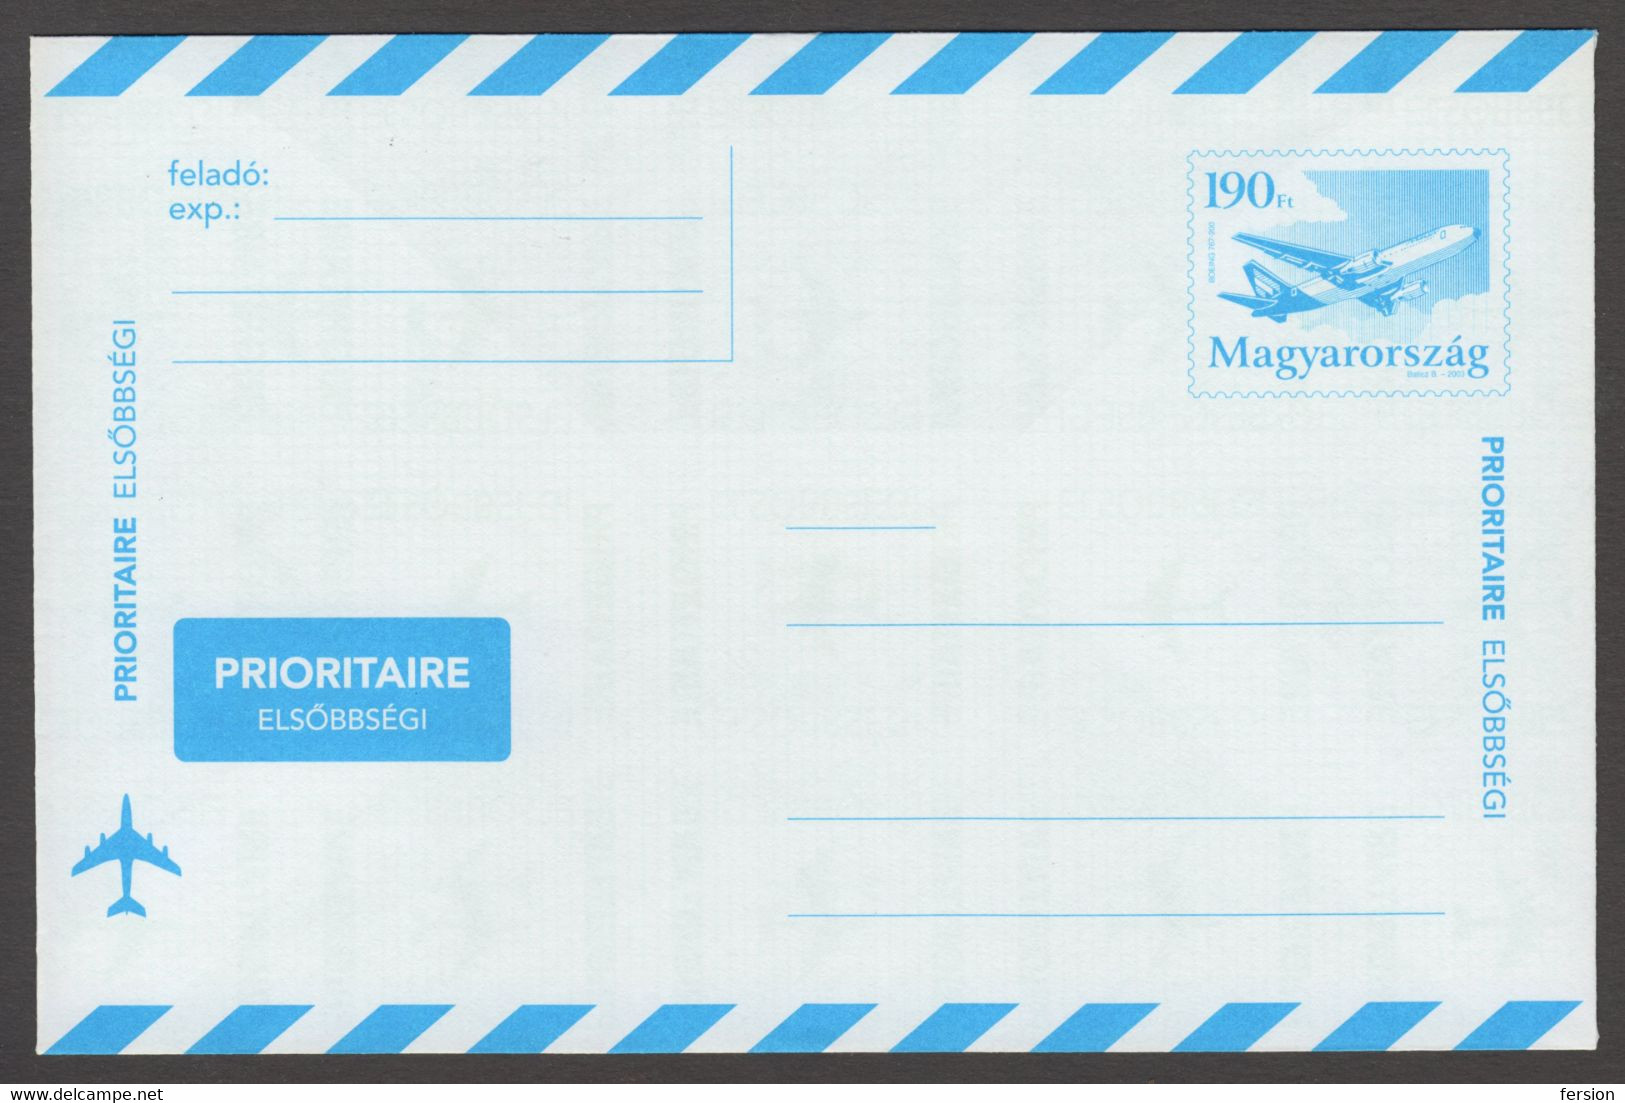 BOEING 737 MALÉV Airplane Airliner 2003 Hungary AIR MAIL PAR AVION Postal Stationery 190 Ft Cover Letter Envelope - Briefe U. Dokumente